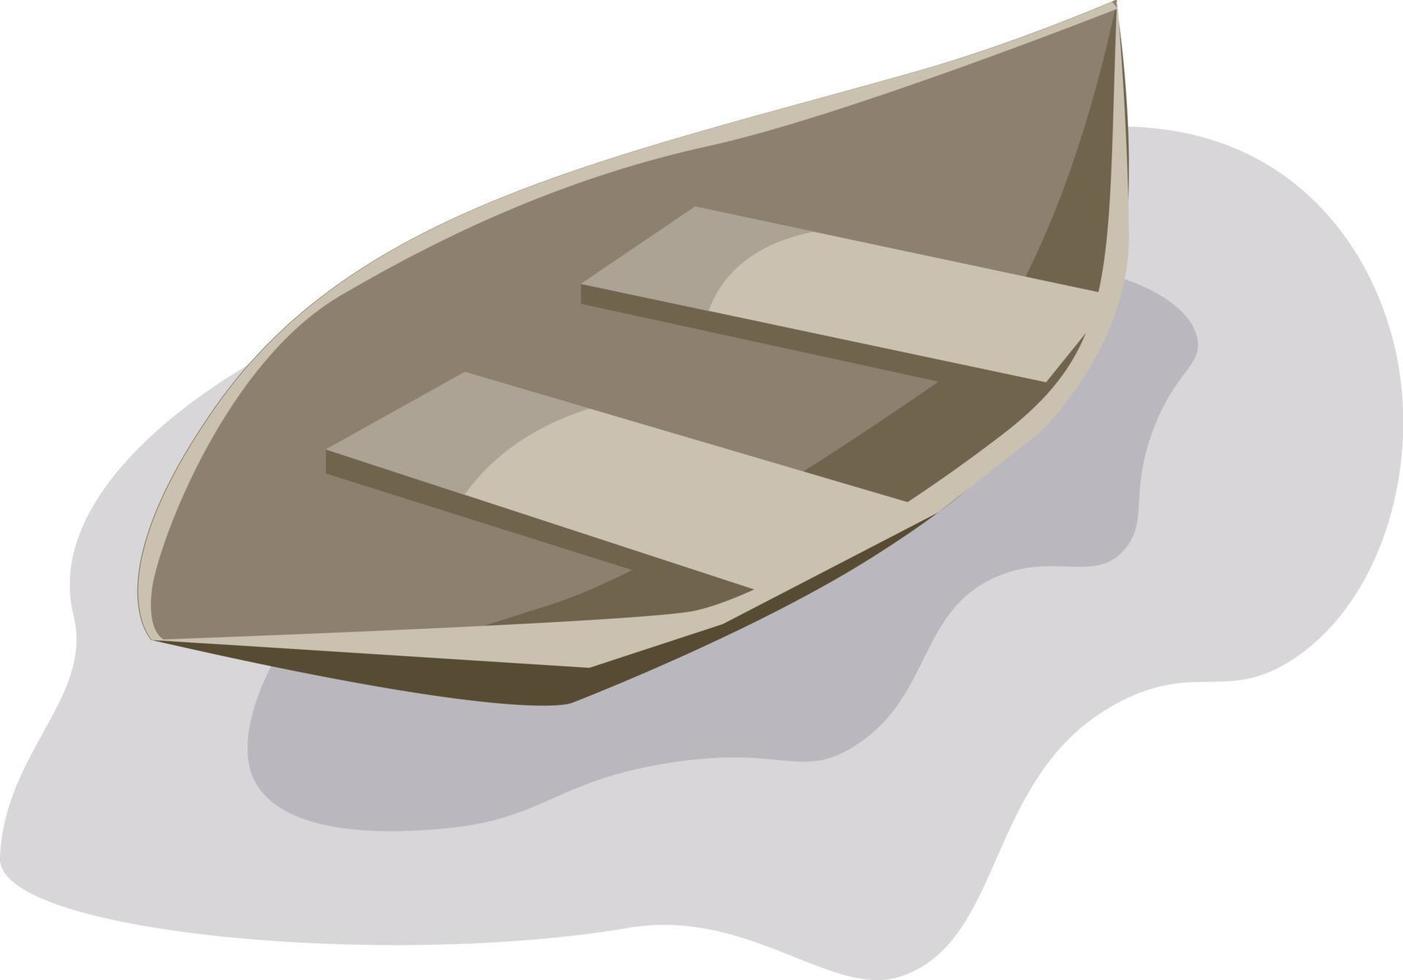 kanot på vatten, illustration, vektor på vit bakgrund.